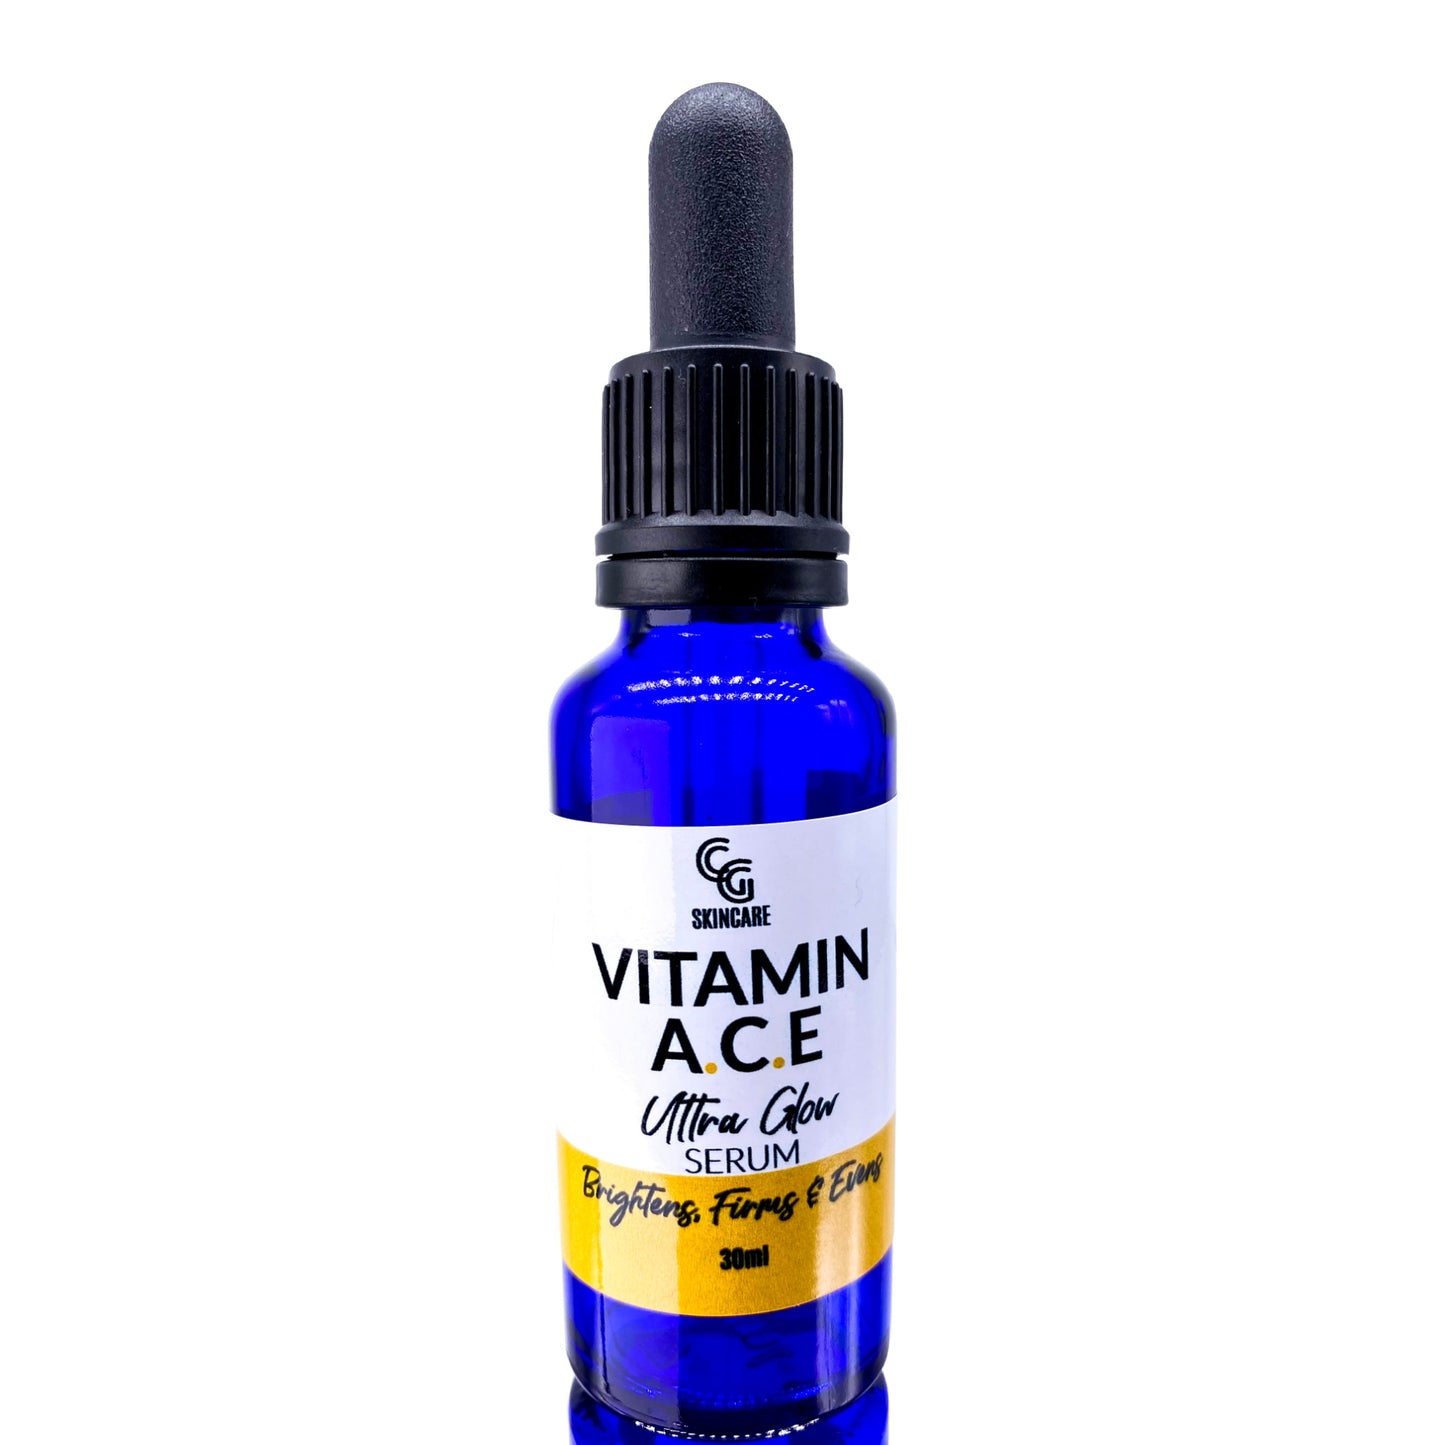 Vitamin 'ACE' Ultra Glow Serum